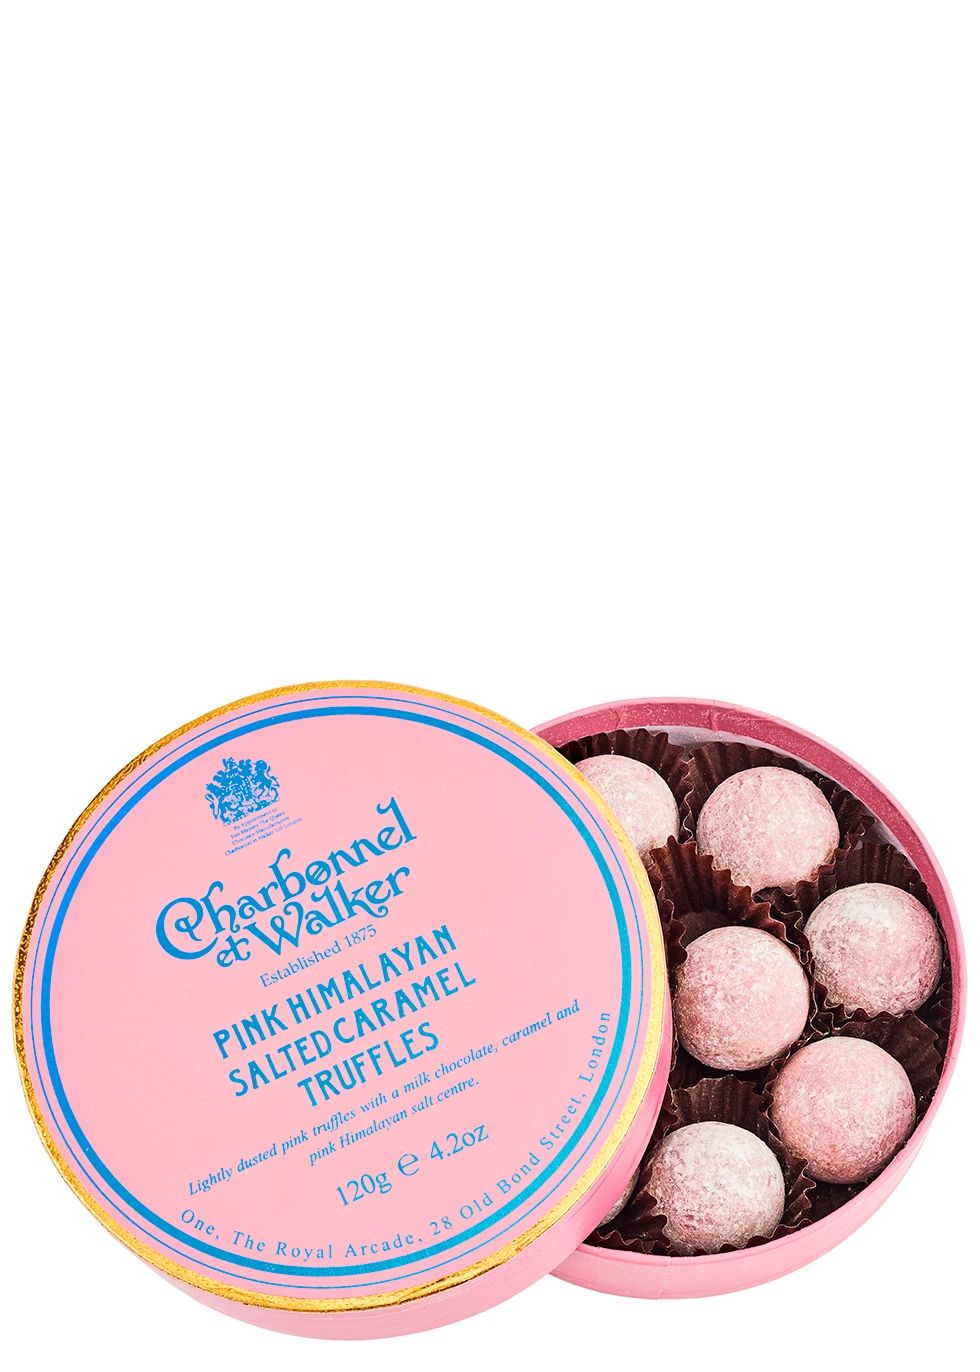 Pink Himalayan Salted Caramel Chocolate Truffles 120g | Harvey Nichols (Global)